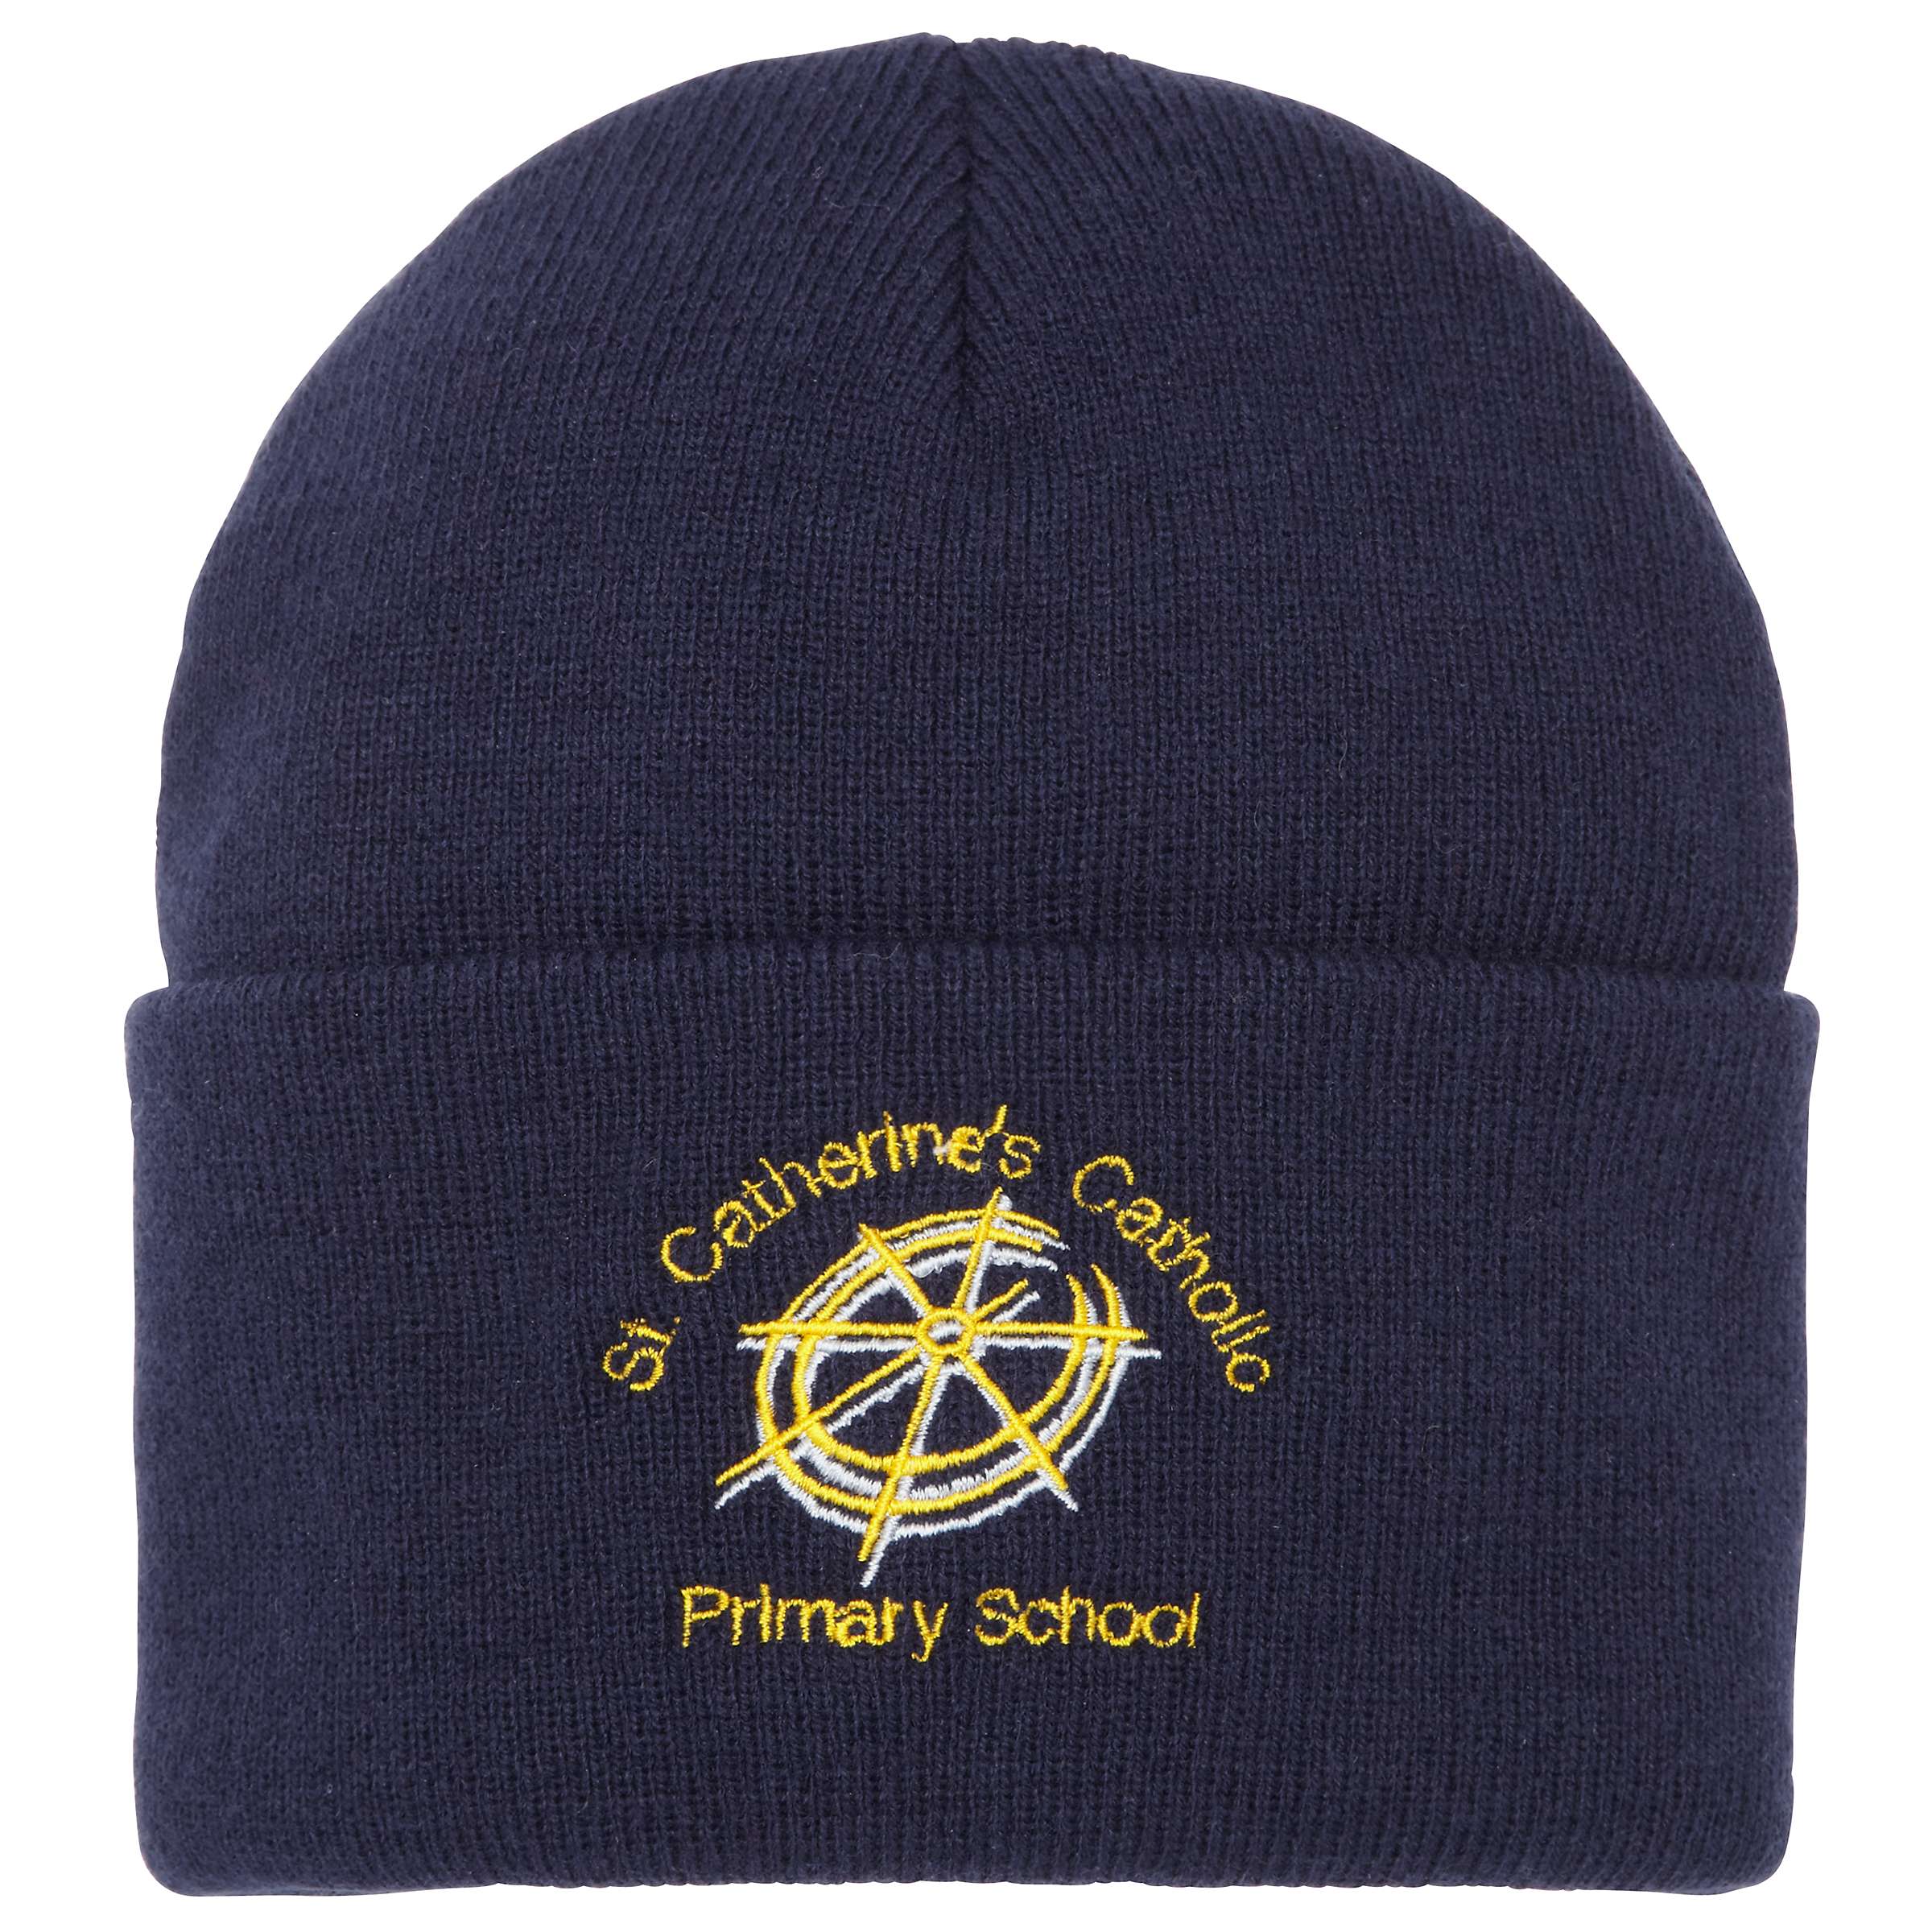 Buy St Catherine's Catholic Primary School Ski Hat, Navy Online at johnlewis.com